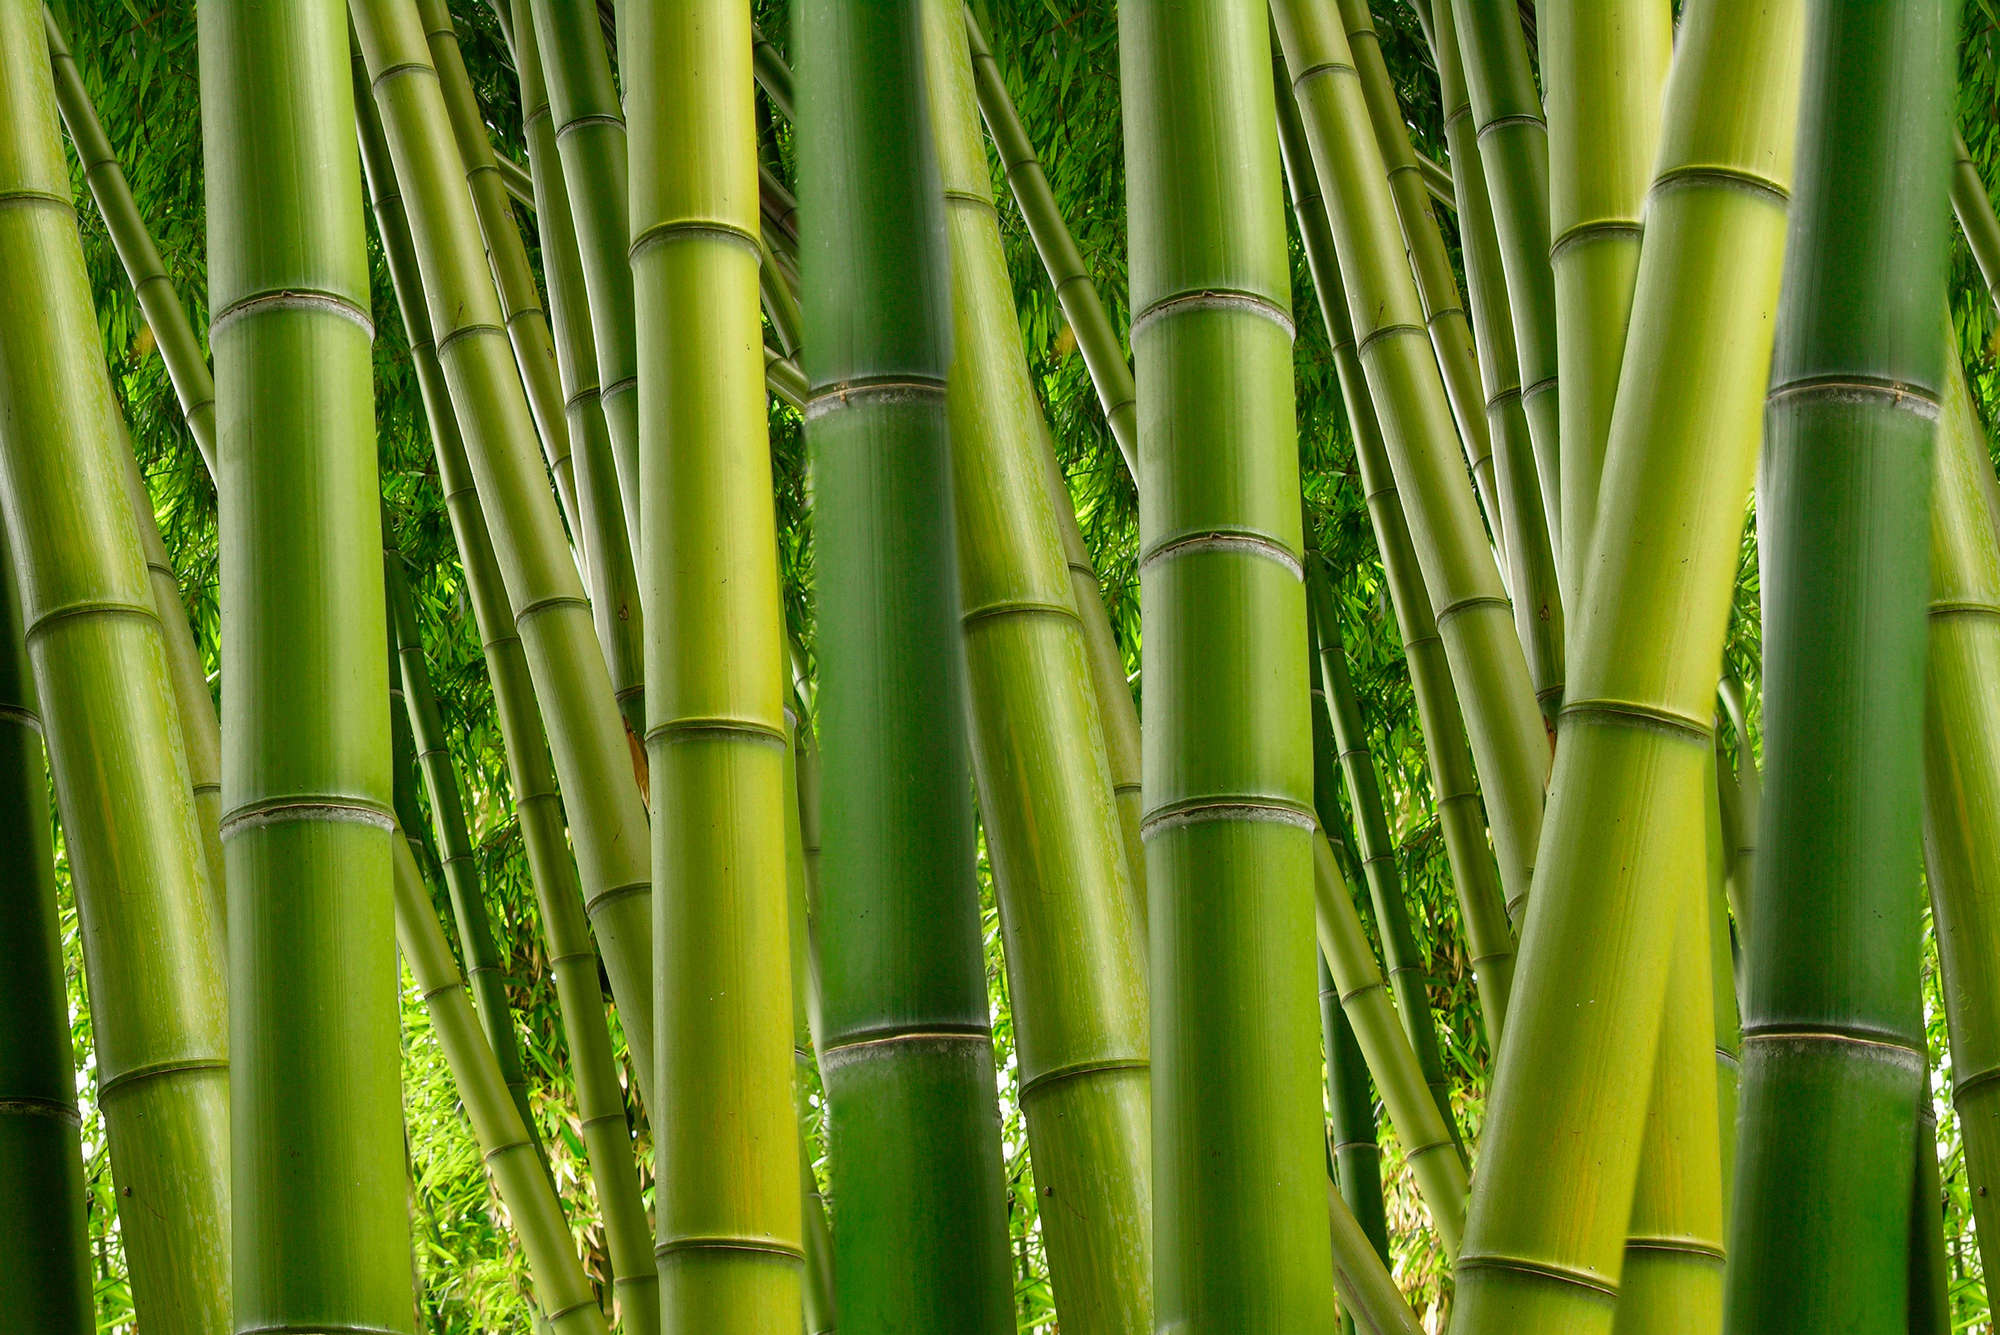             Natuur Behang Bamboe Bosmotief op Premium Glad Vlies
        